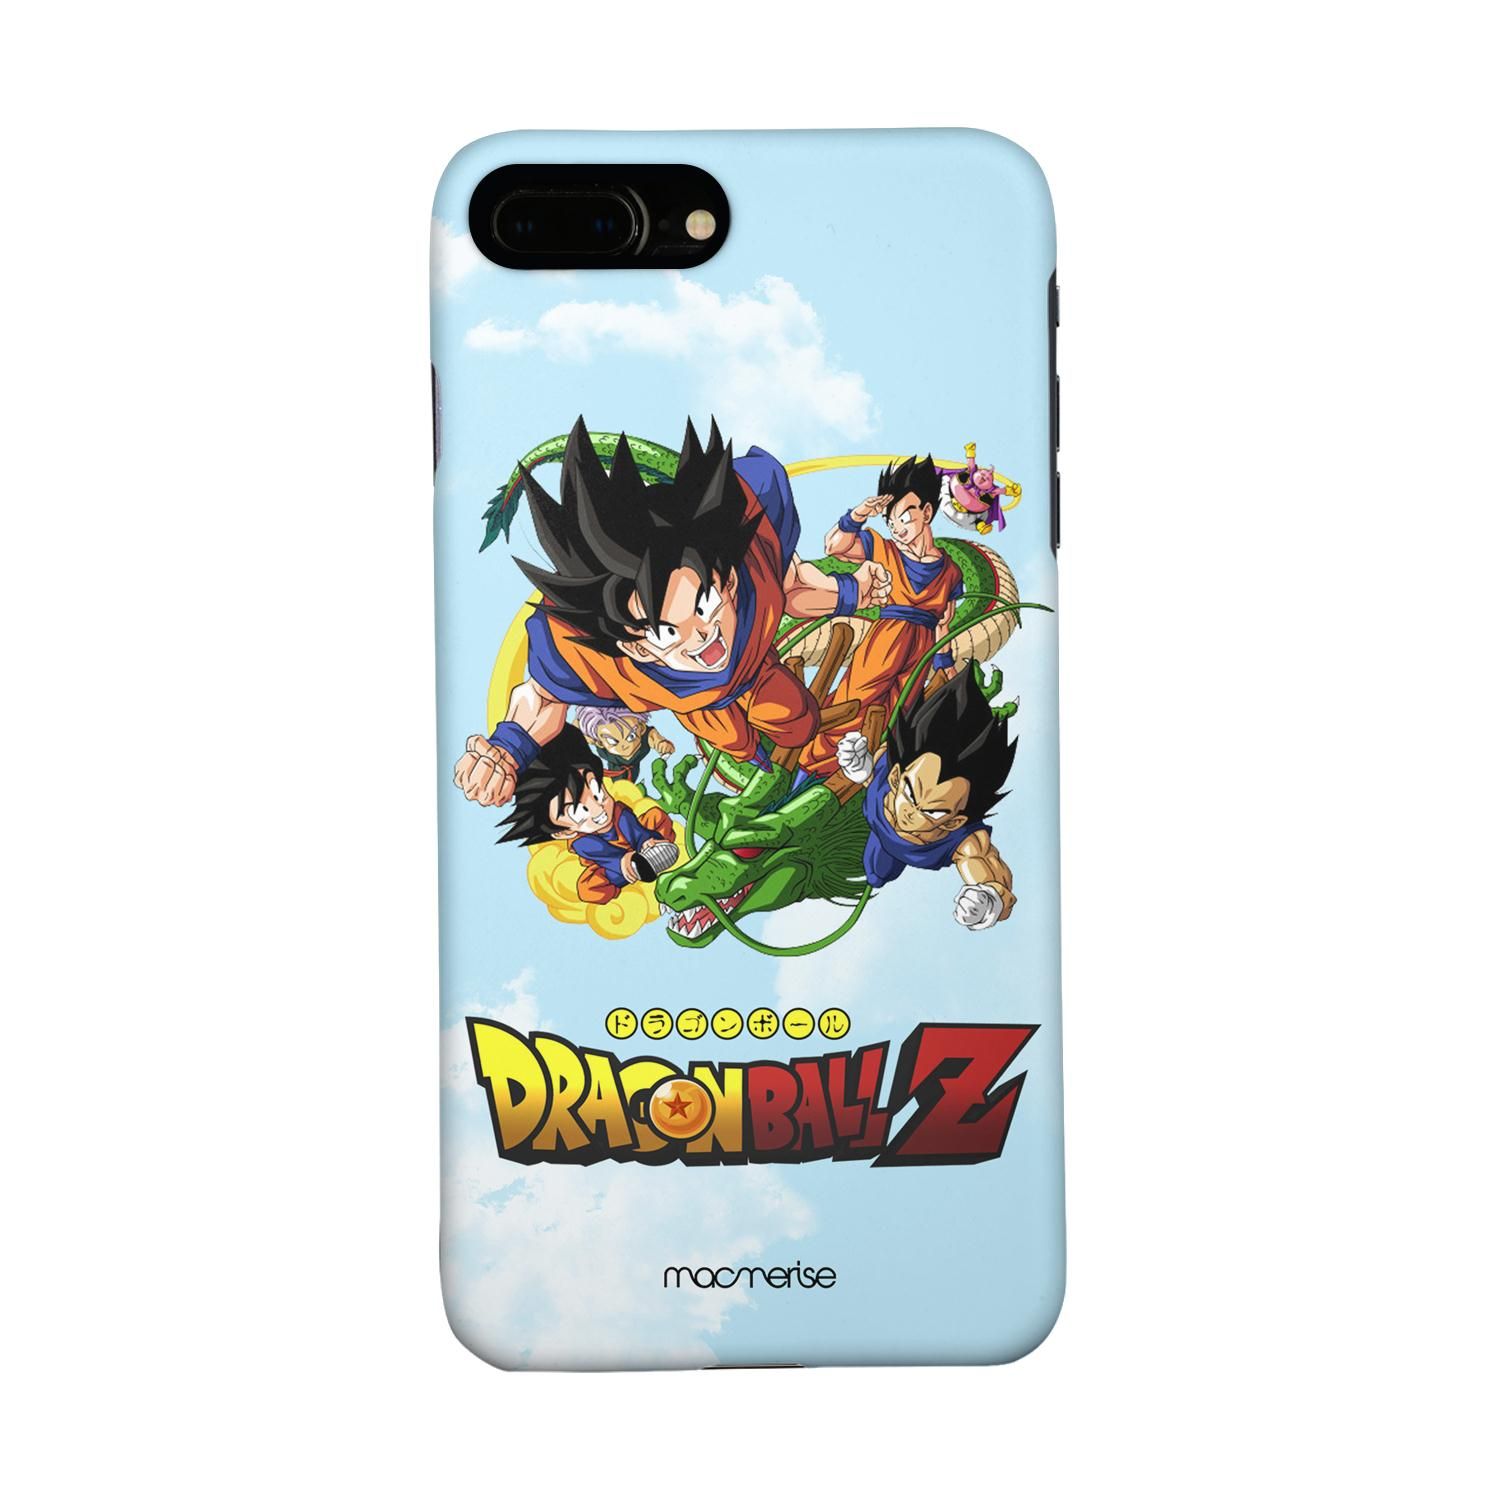 Buy Dragon ball Z - Sleek Phone Case for iPhone 7 Plus Online